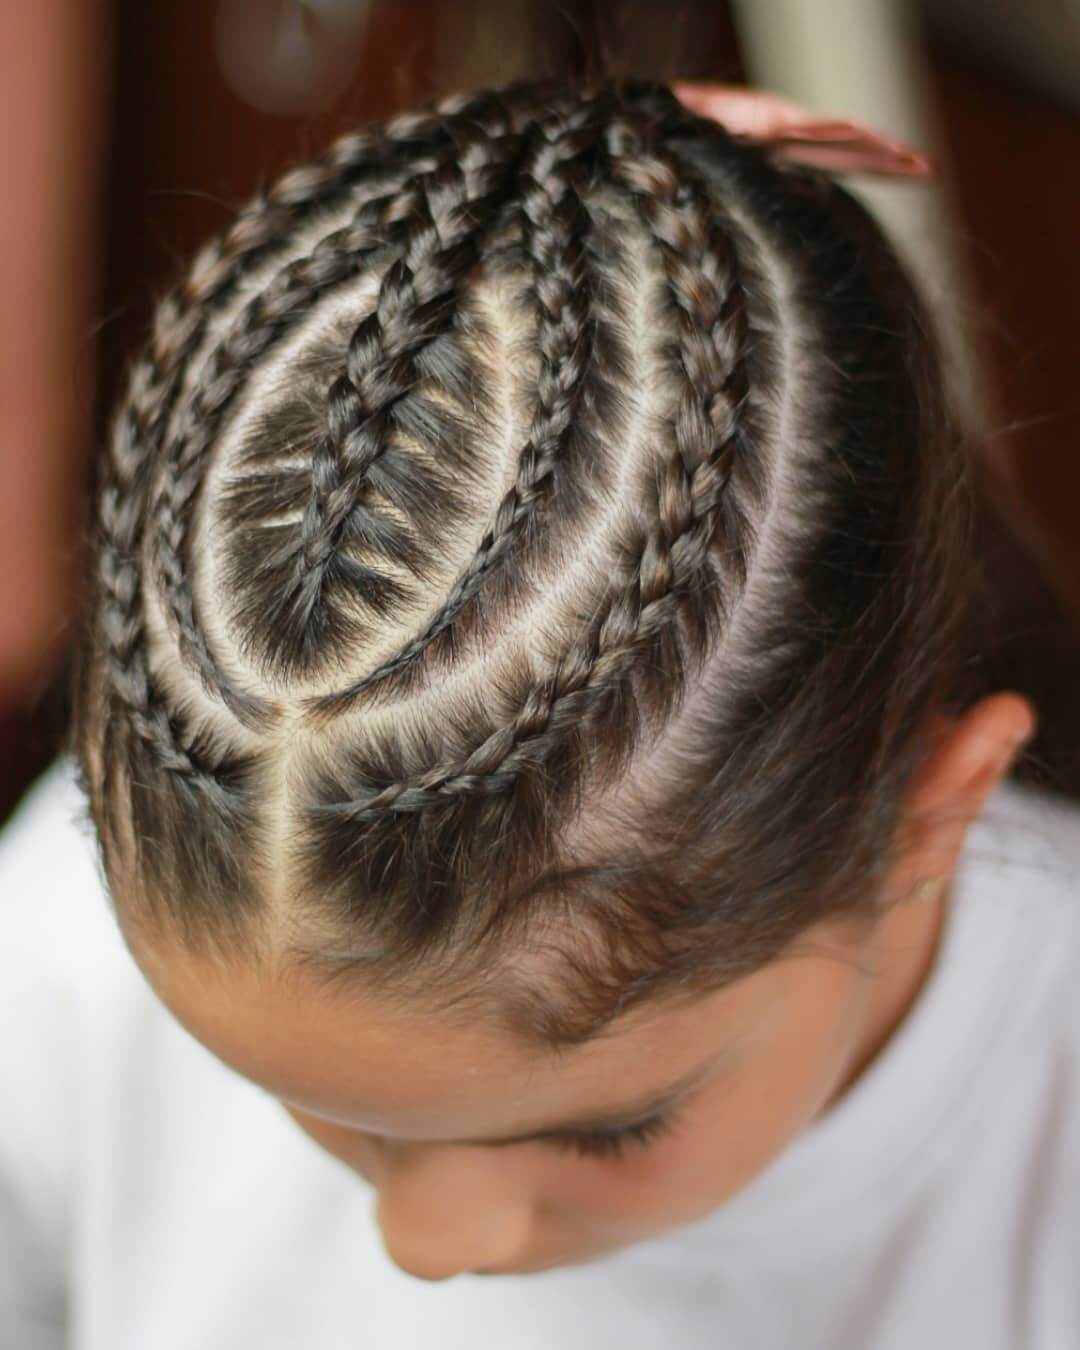 Cornrow braids hairstyle for kids